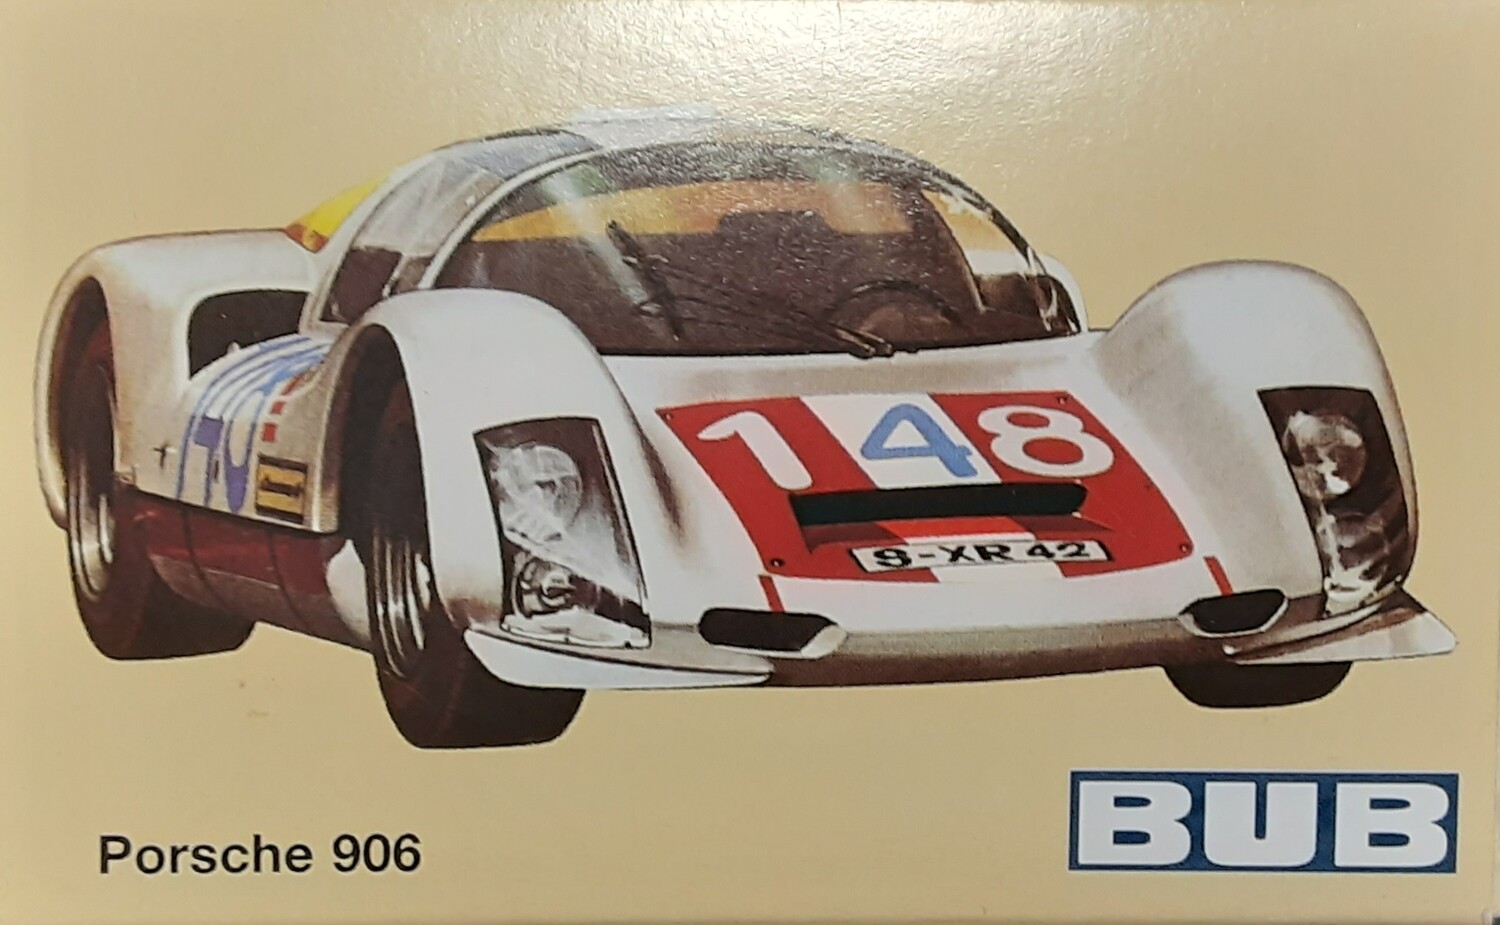 BUB Porsche 906